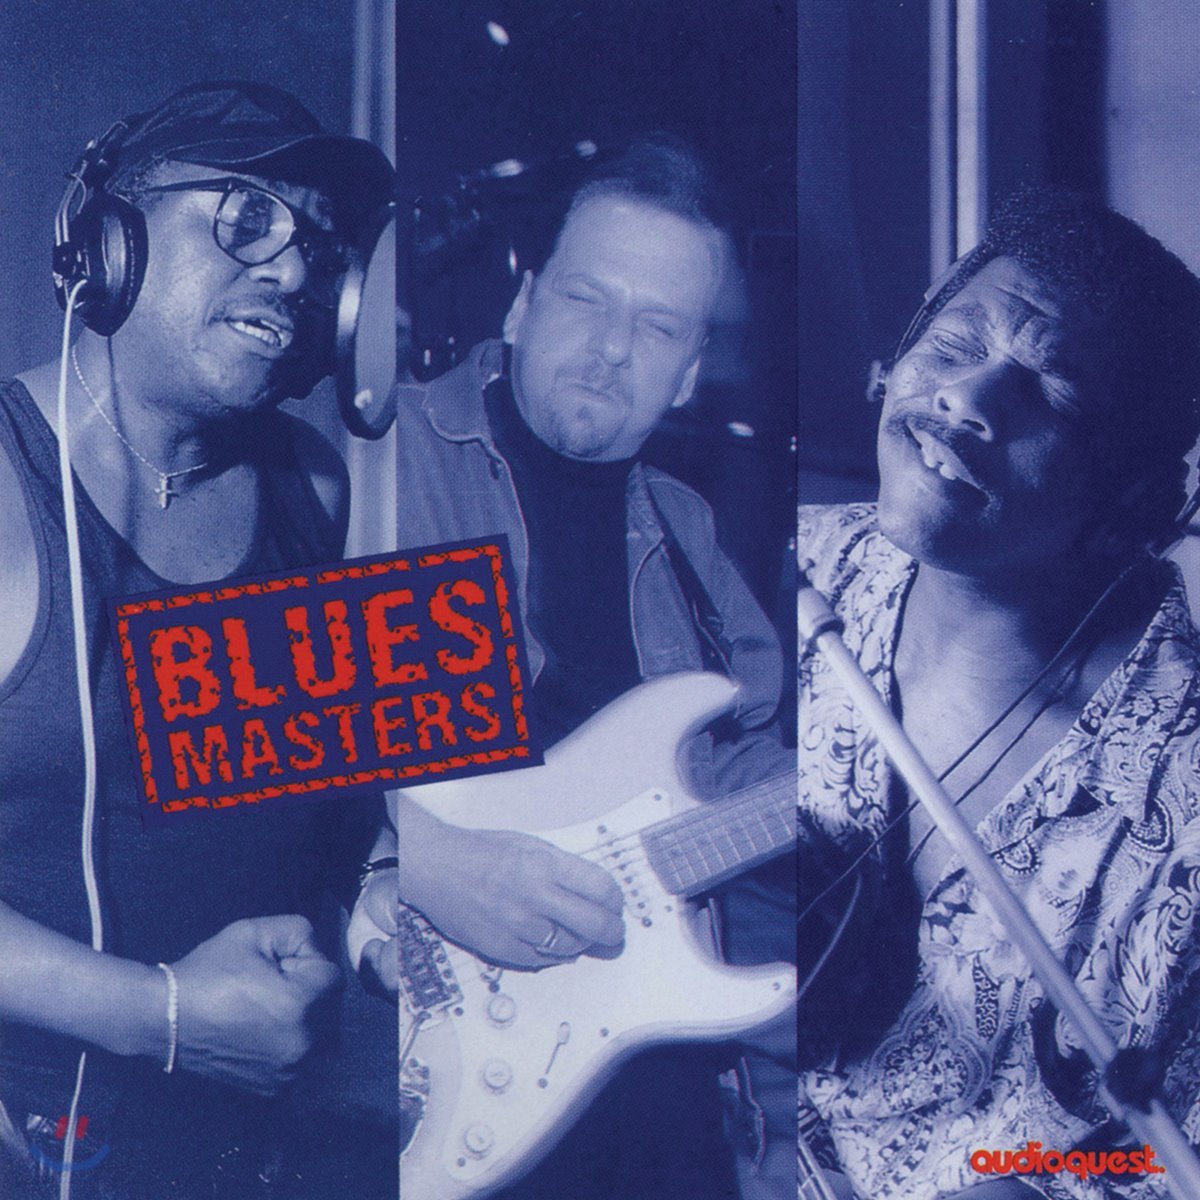 Audioquest Sledgehammer Blues 레이블 블루스 음악 모음집 (Blues Masters)